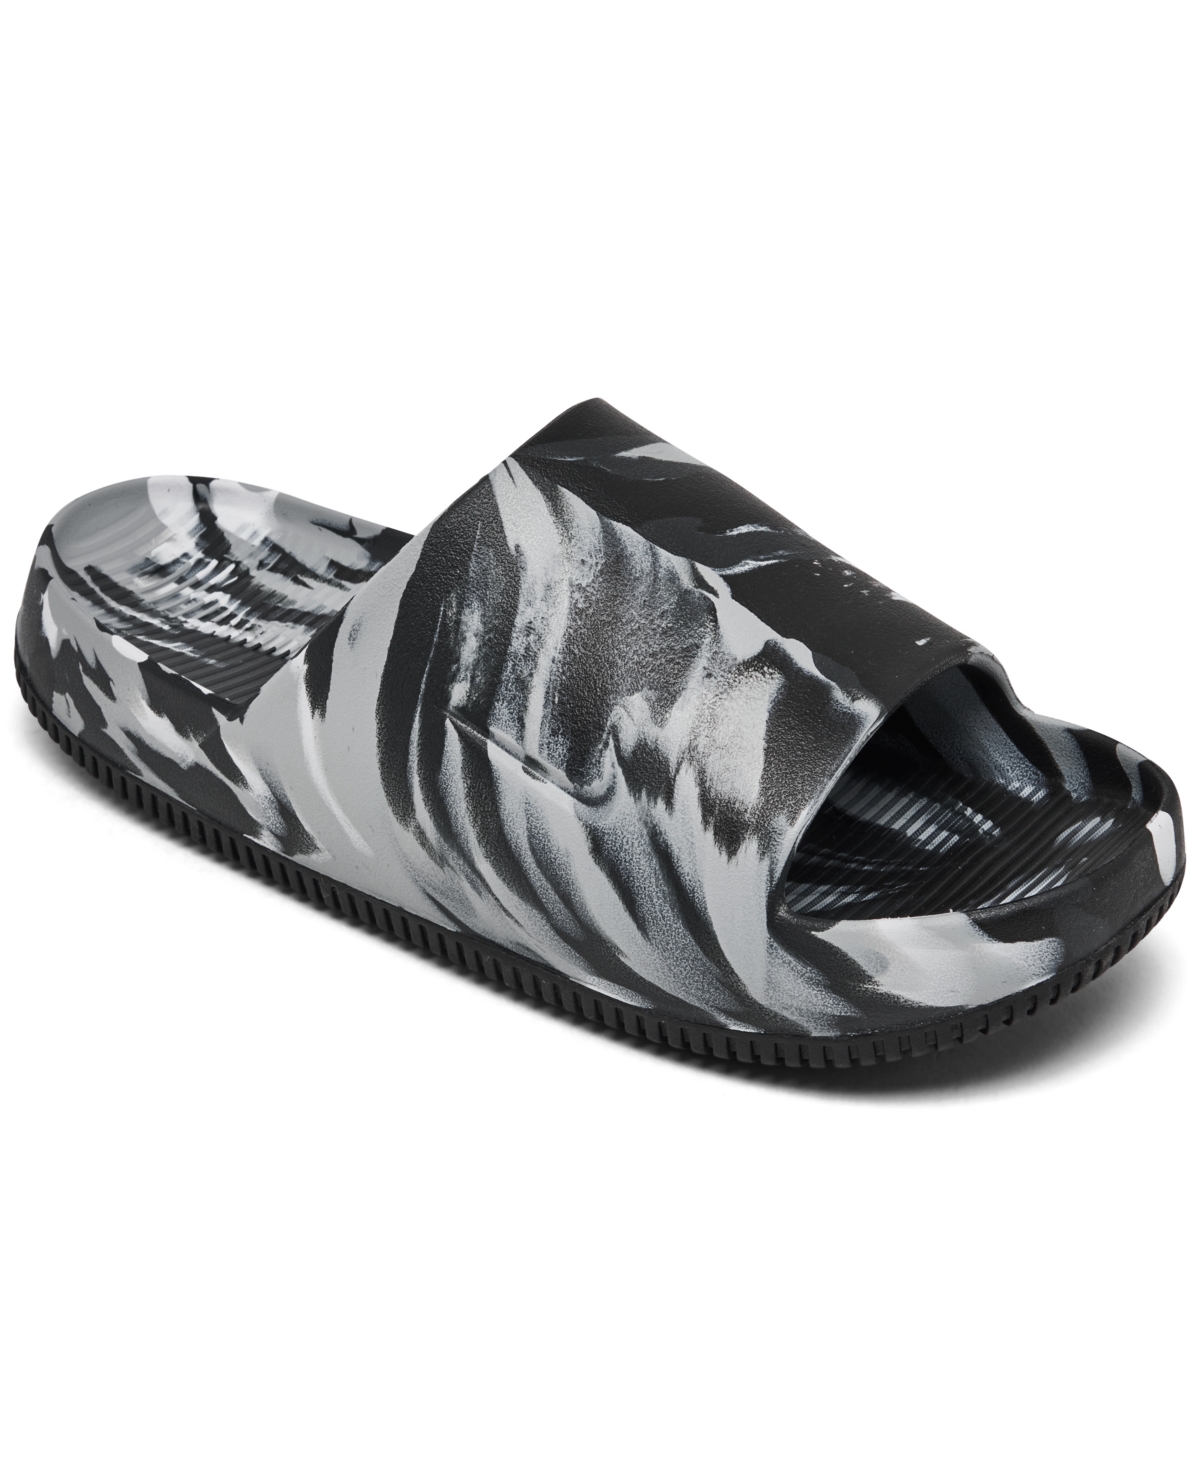 Men's Calm Marbled Slide Sandals from Finish Line - Black Marble